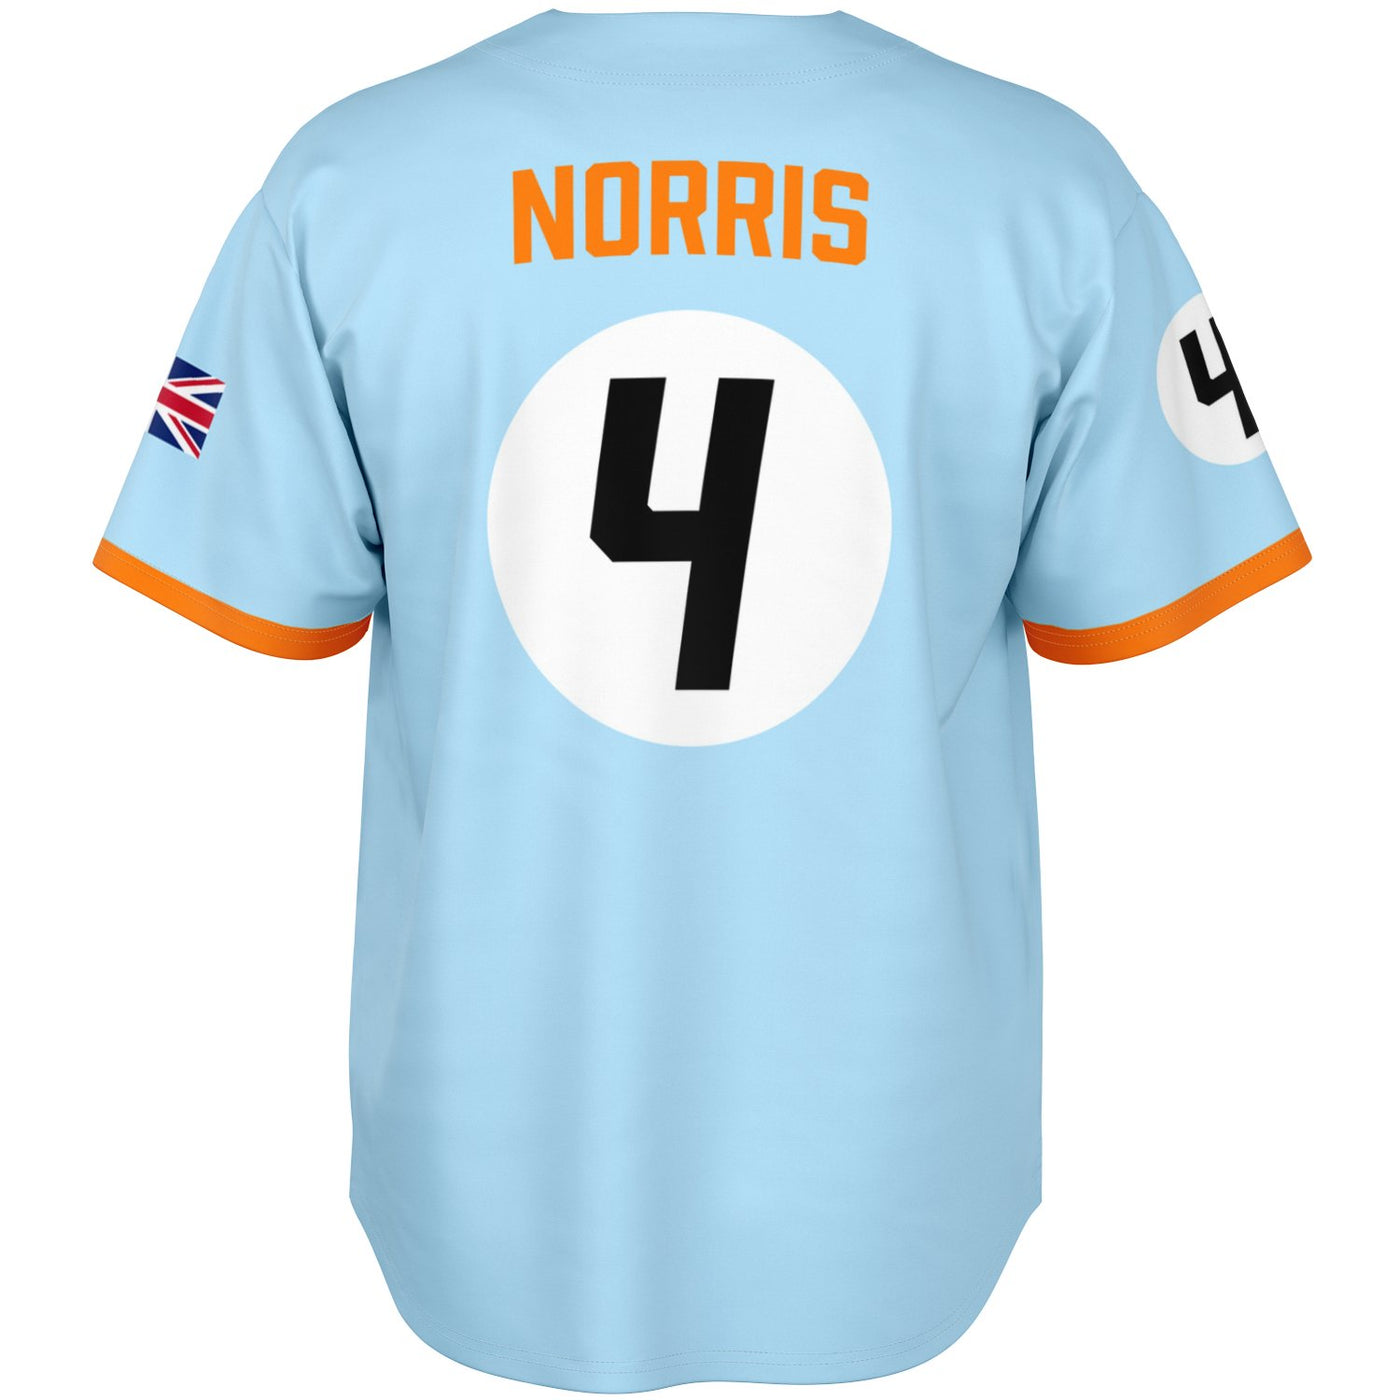 Norris - Away Jersey - Furious Motorsport